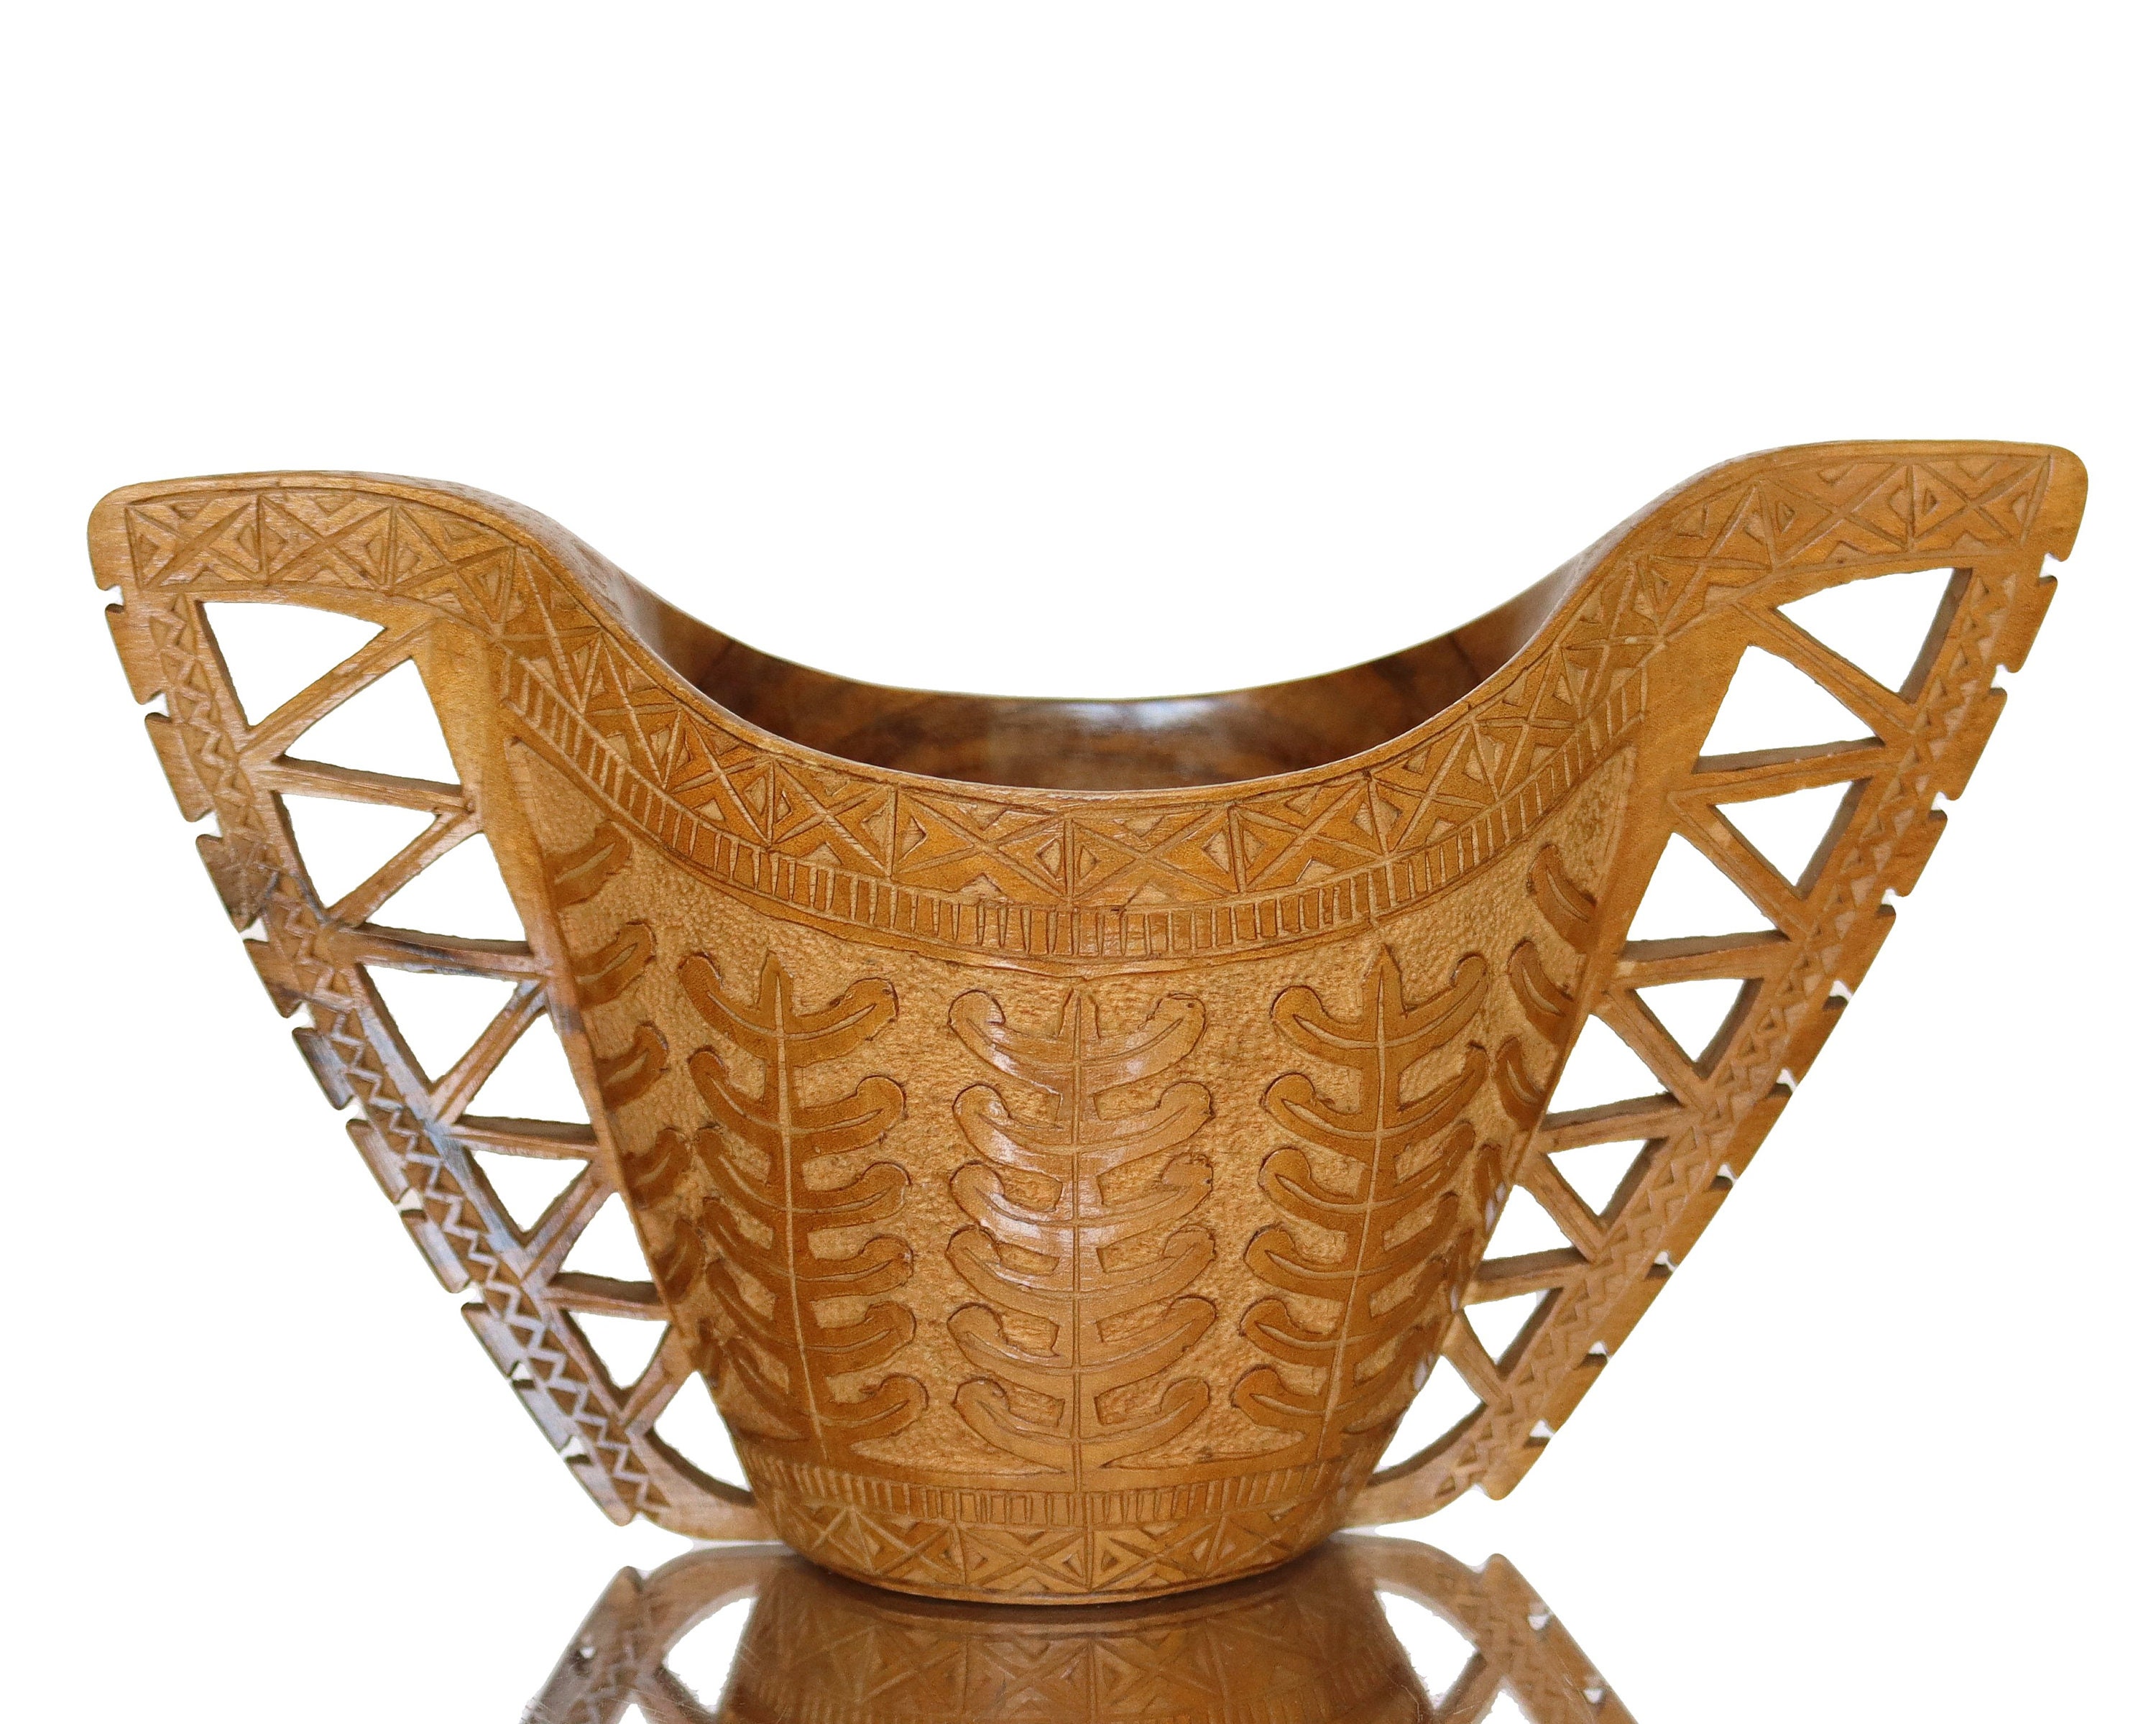 Kuksa Carving: Traditional Scandinavian Drinking Cup - 3/7/2020